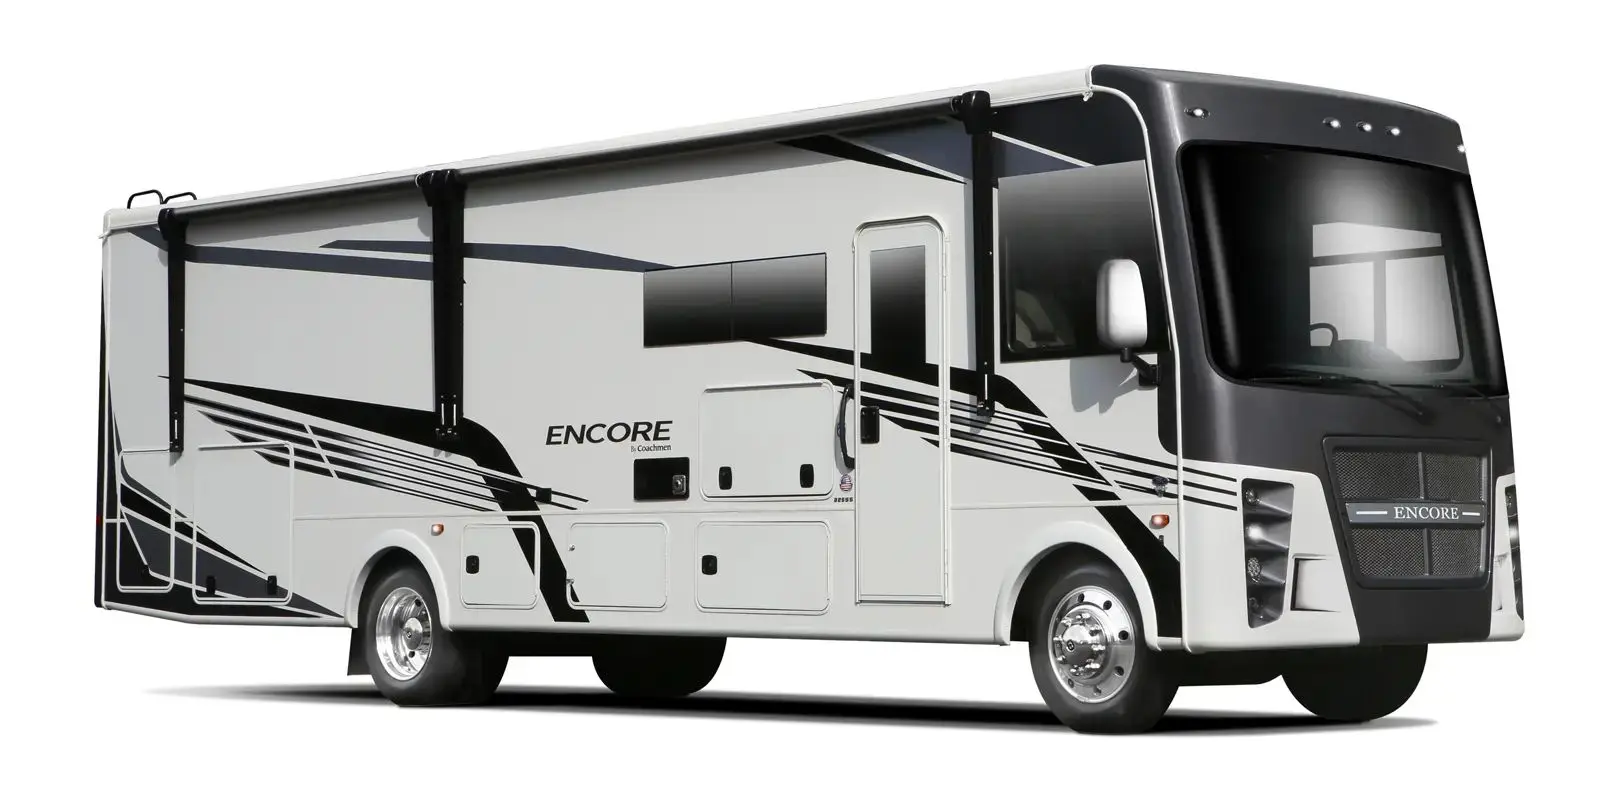 Encore SE Class A Motor Home